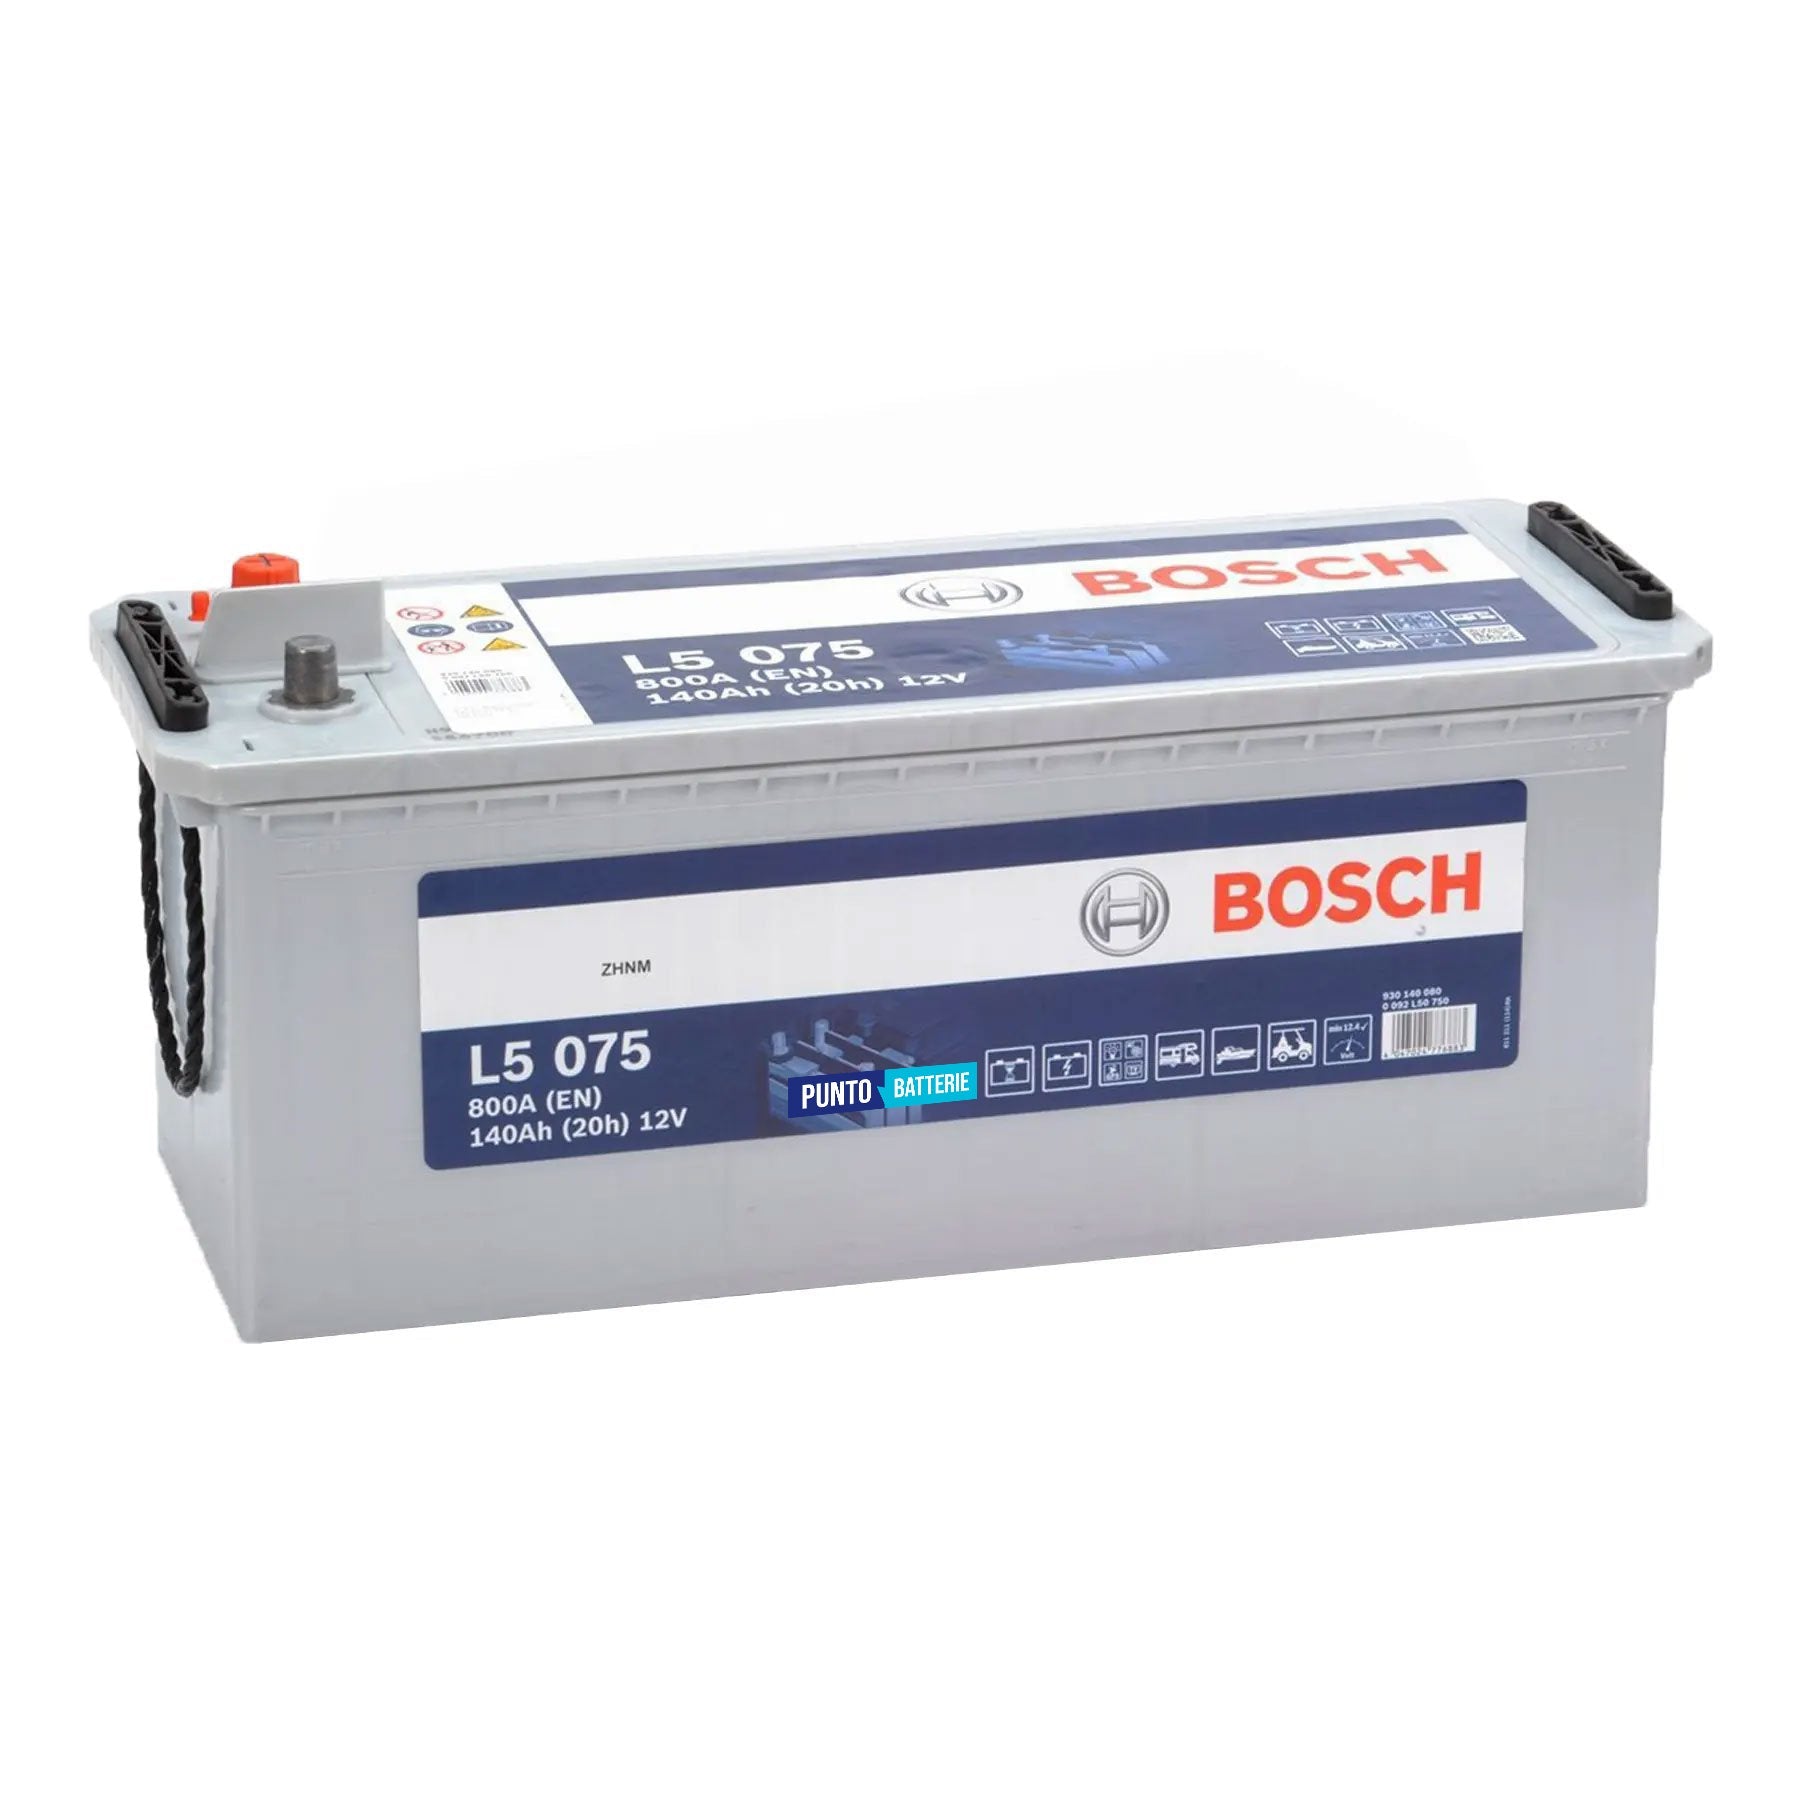 Batteria originale Bosch L5 L5 075, dimensioni 513 x 189 x 223, 12 volt, 140 amperora. Batteria per servizi di camper, barca e applicazioni a scarica lenta.